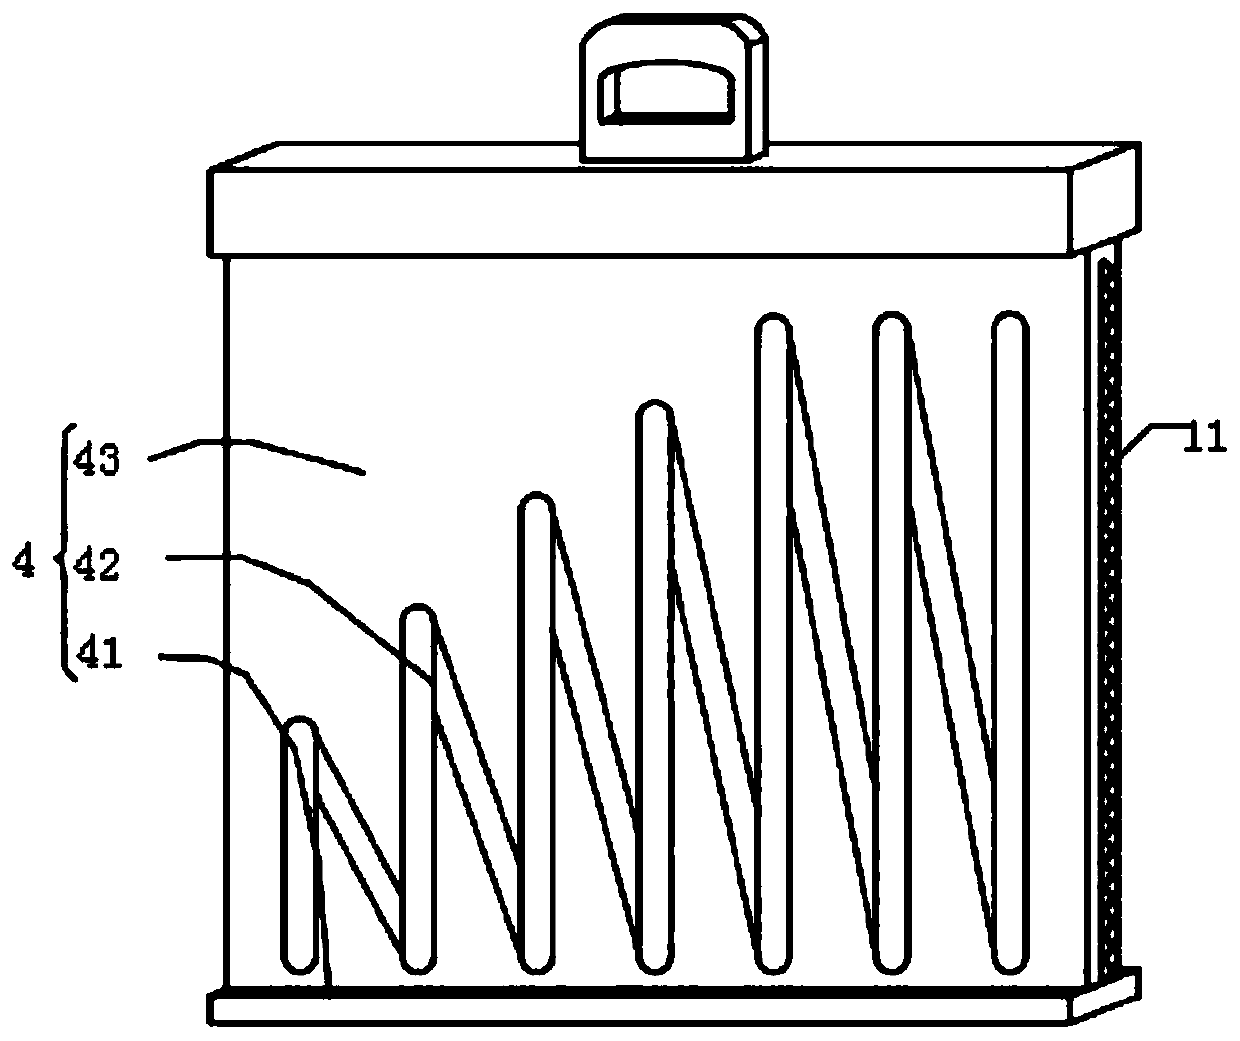 A magnesium alloy electrophoretic coating equipment